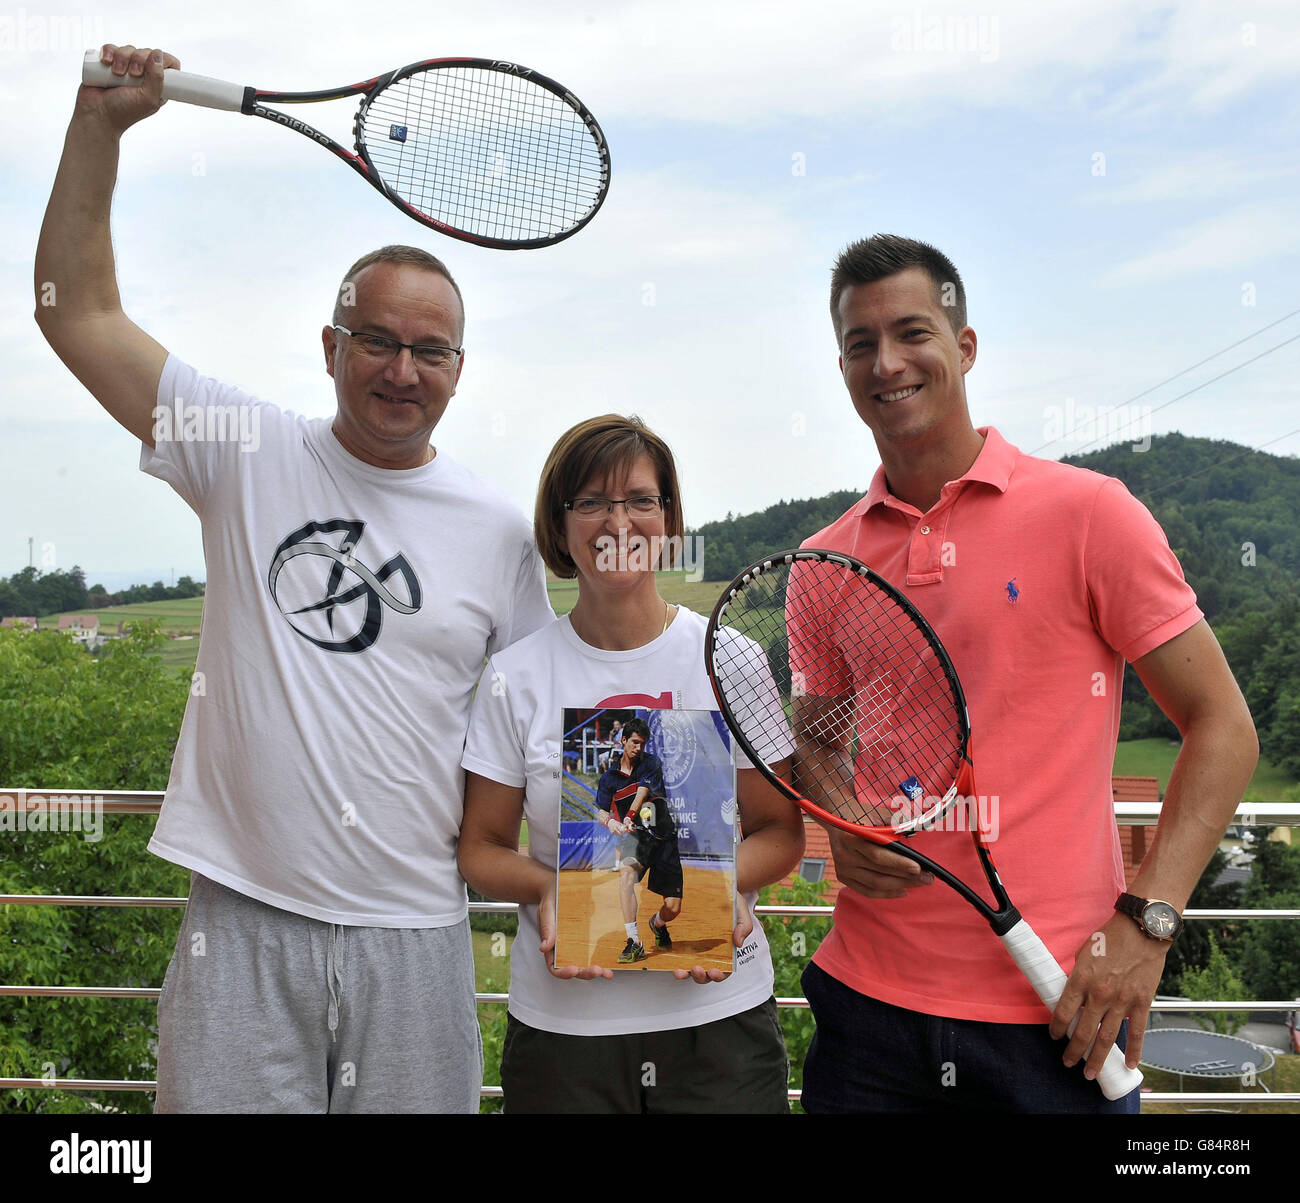 Tennis - Aljaz Bedene Feature - Ljubljiana Stock Photo - Alamy